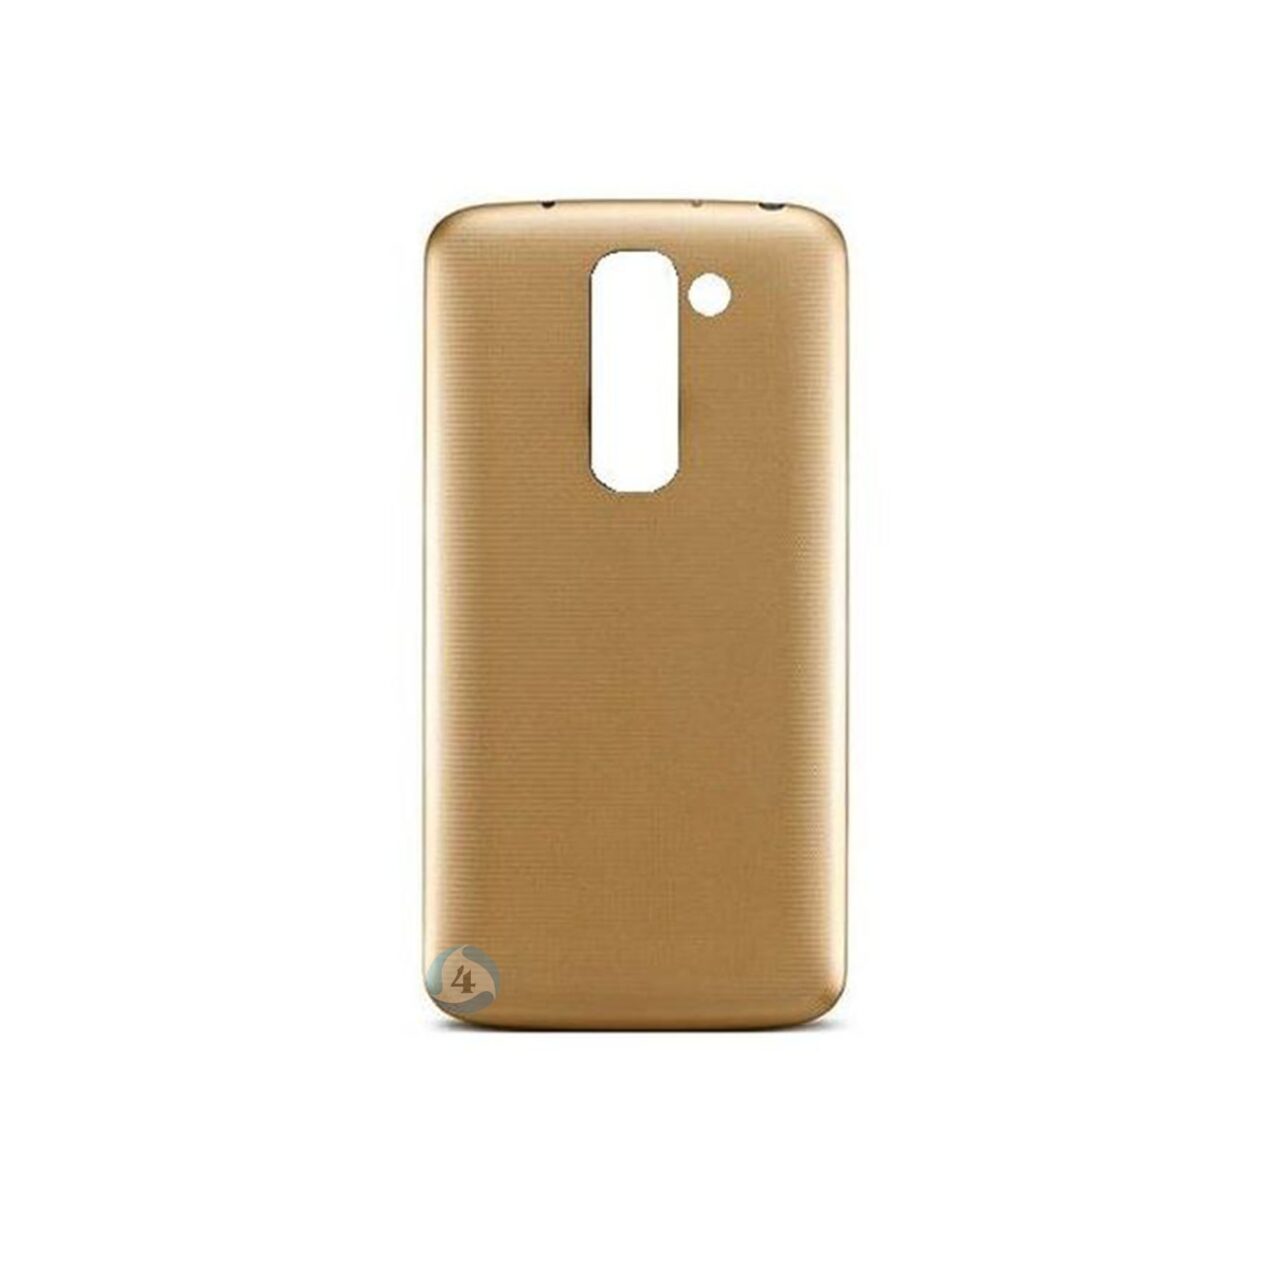 LG G2 mini backcover gold